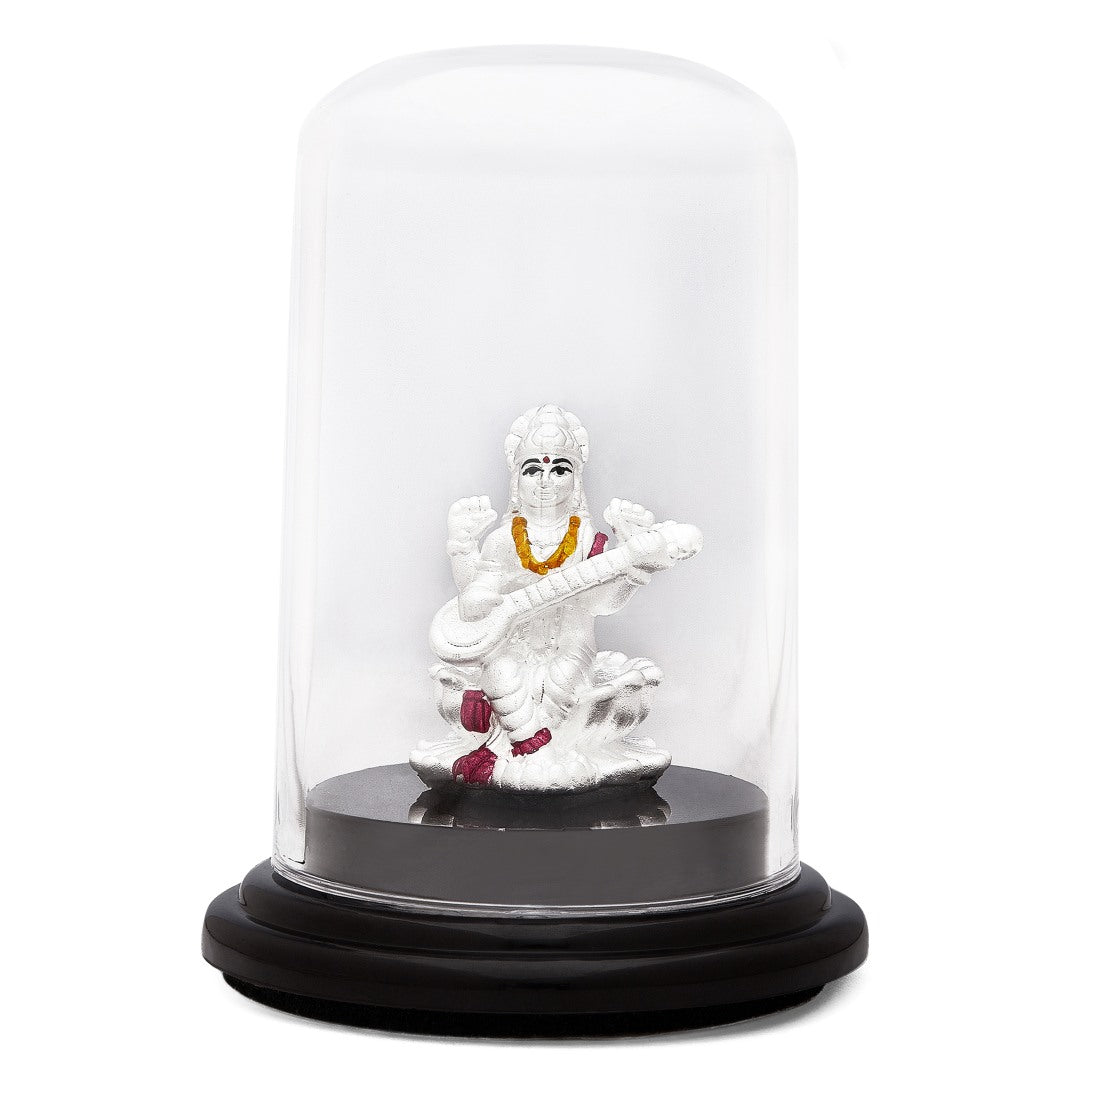 Saraswati's Serenade Rhodium-Plated 999 Sterling Silver Saraswati Ji Idol